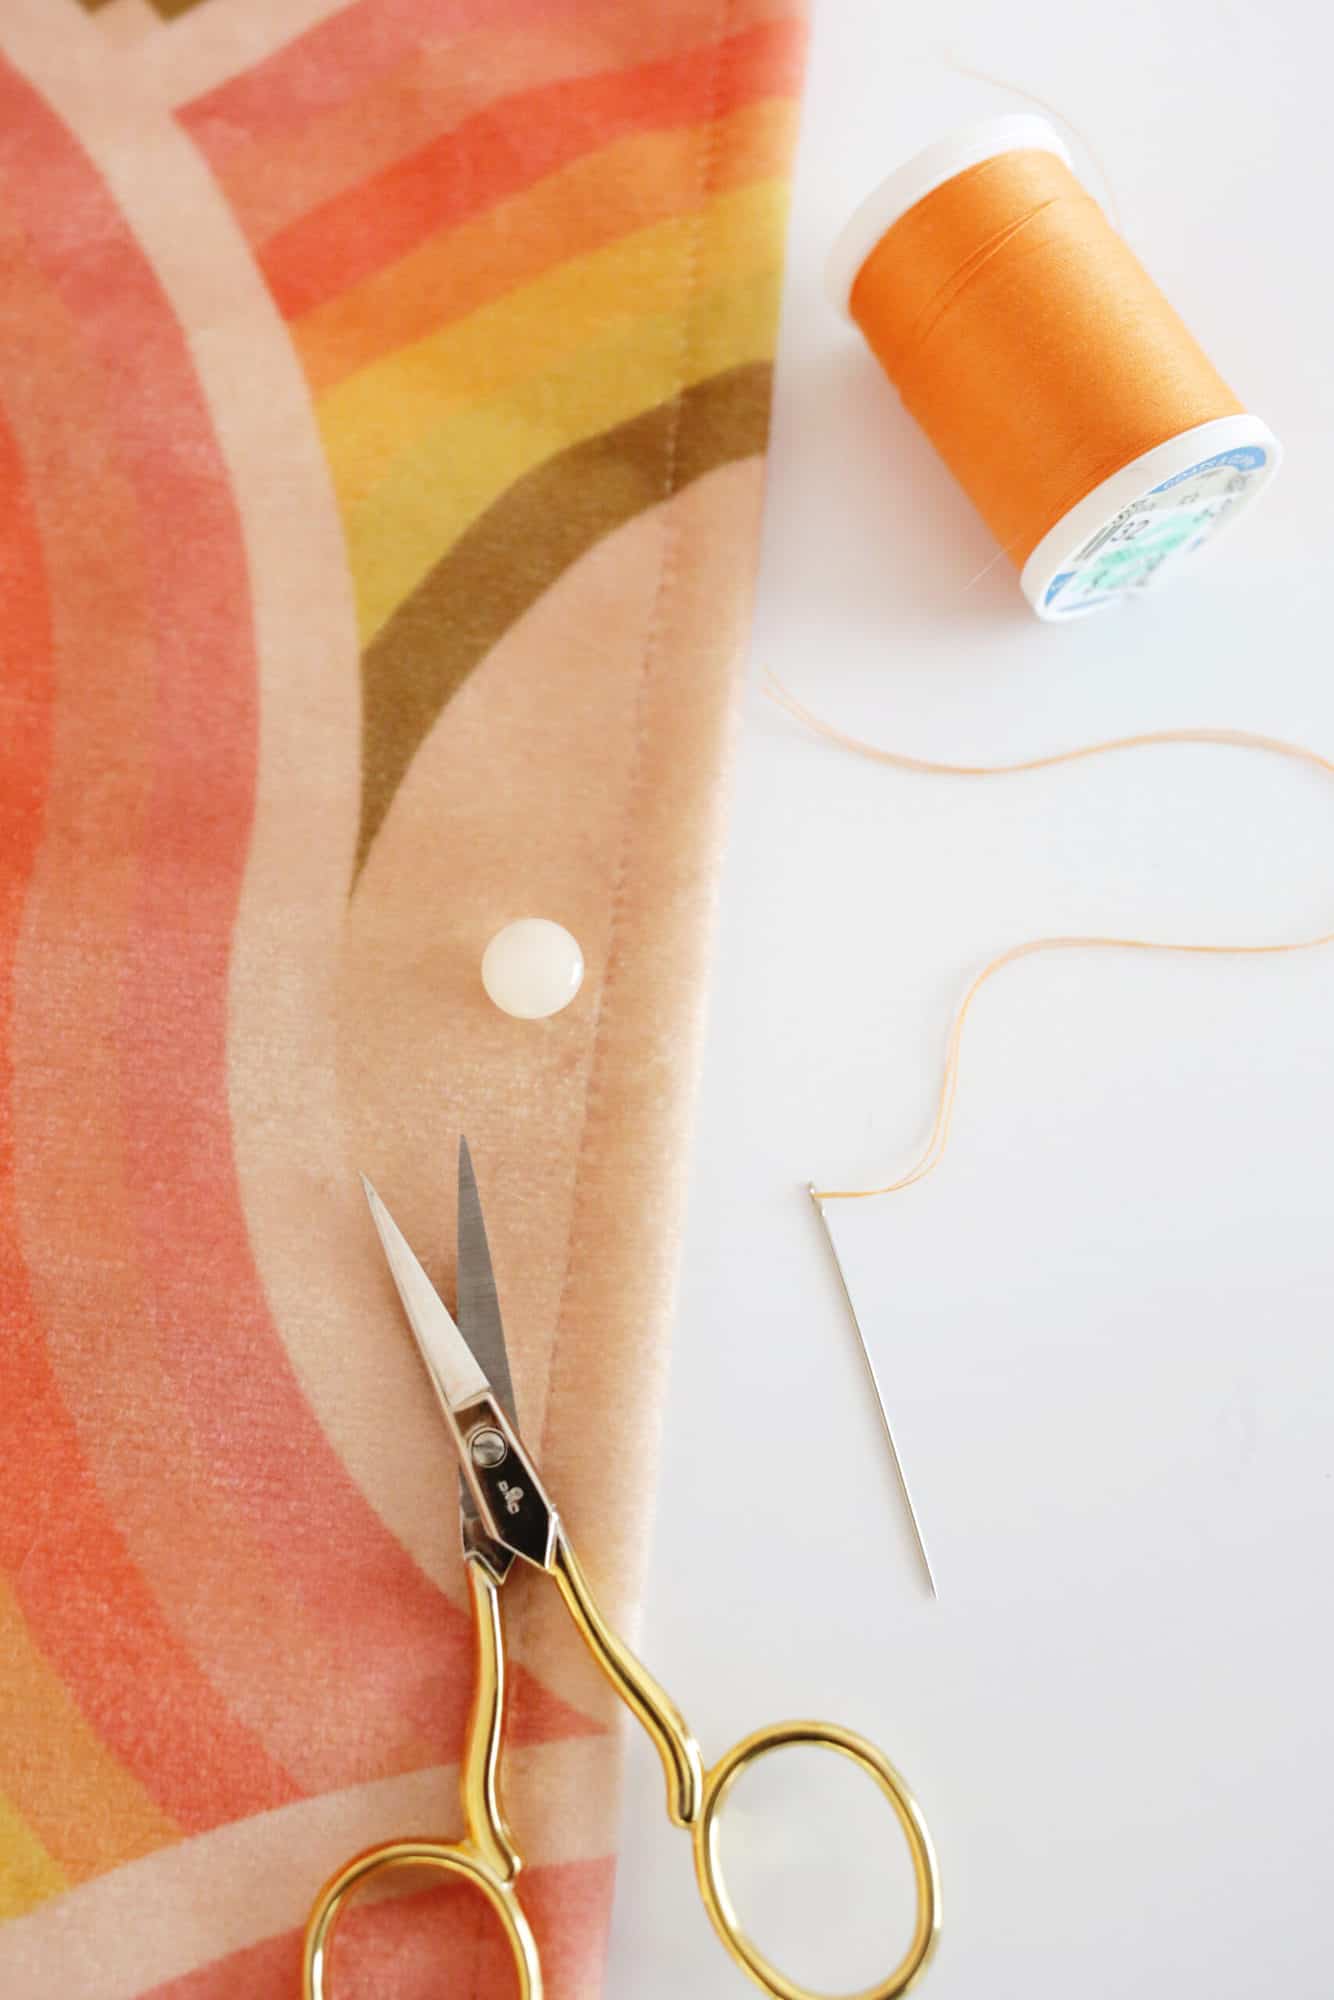 shank button sewn onto thread